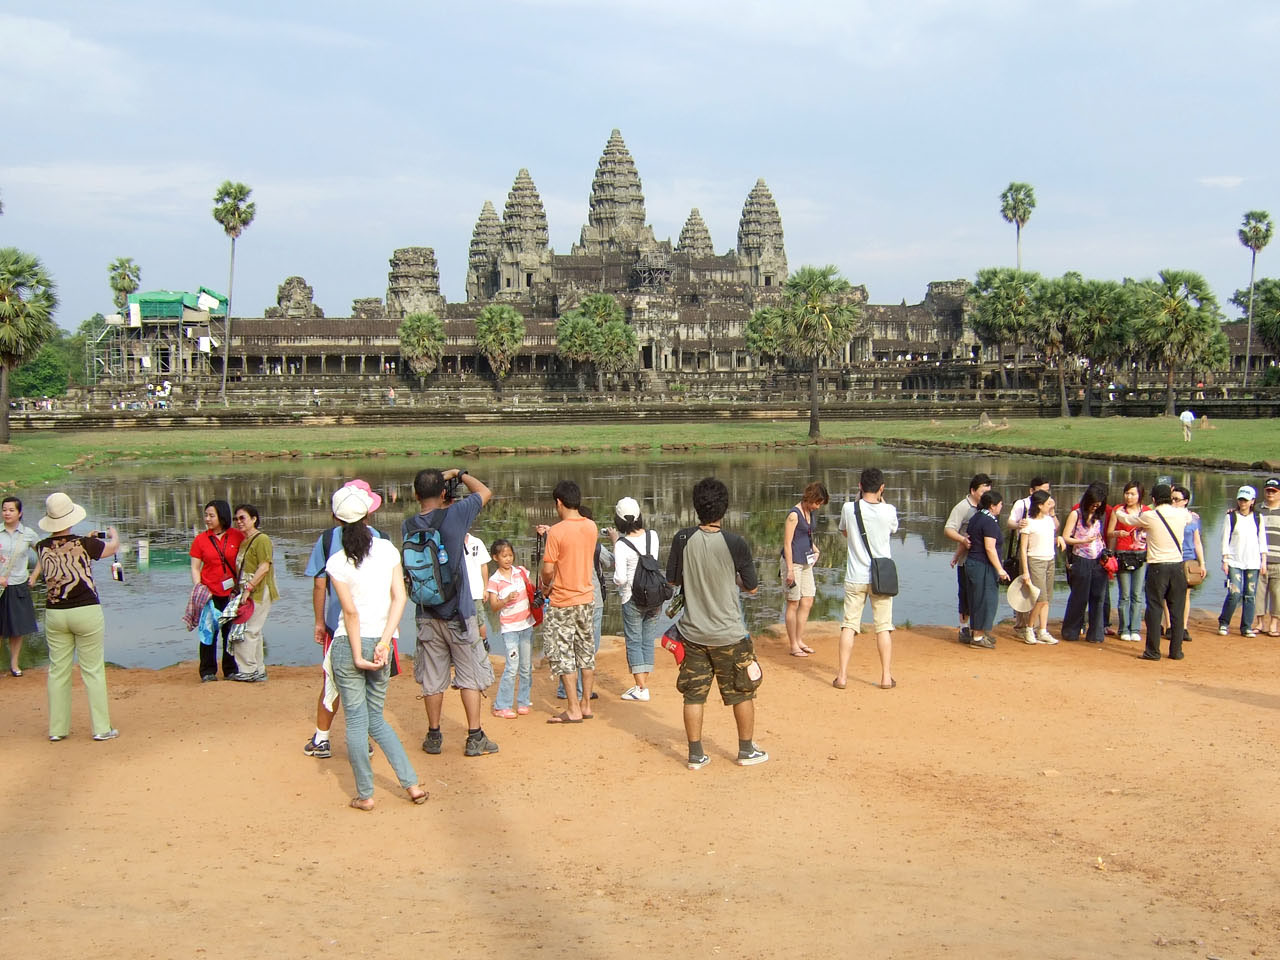 Tourists at Angkor Wat. Image: Wikimedia Commons
